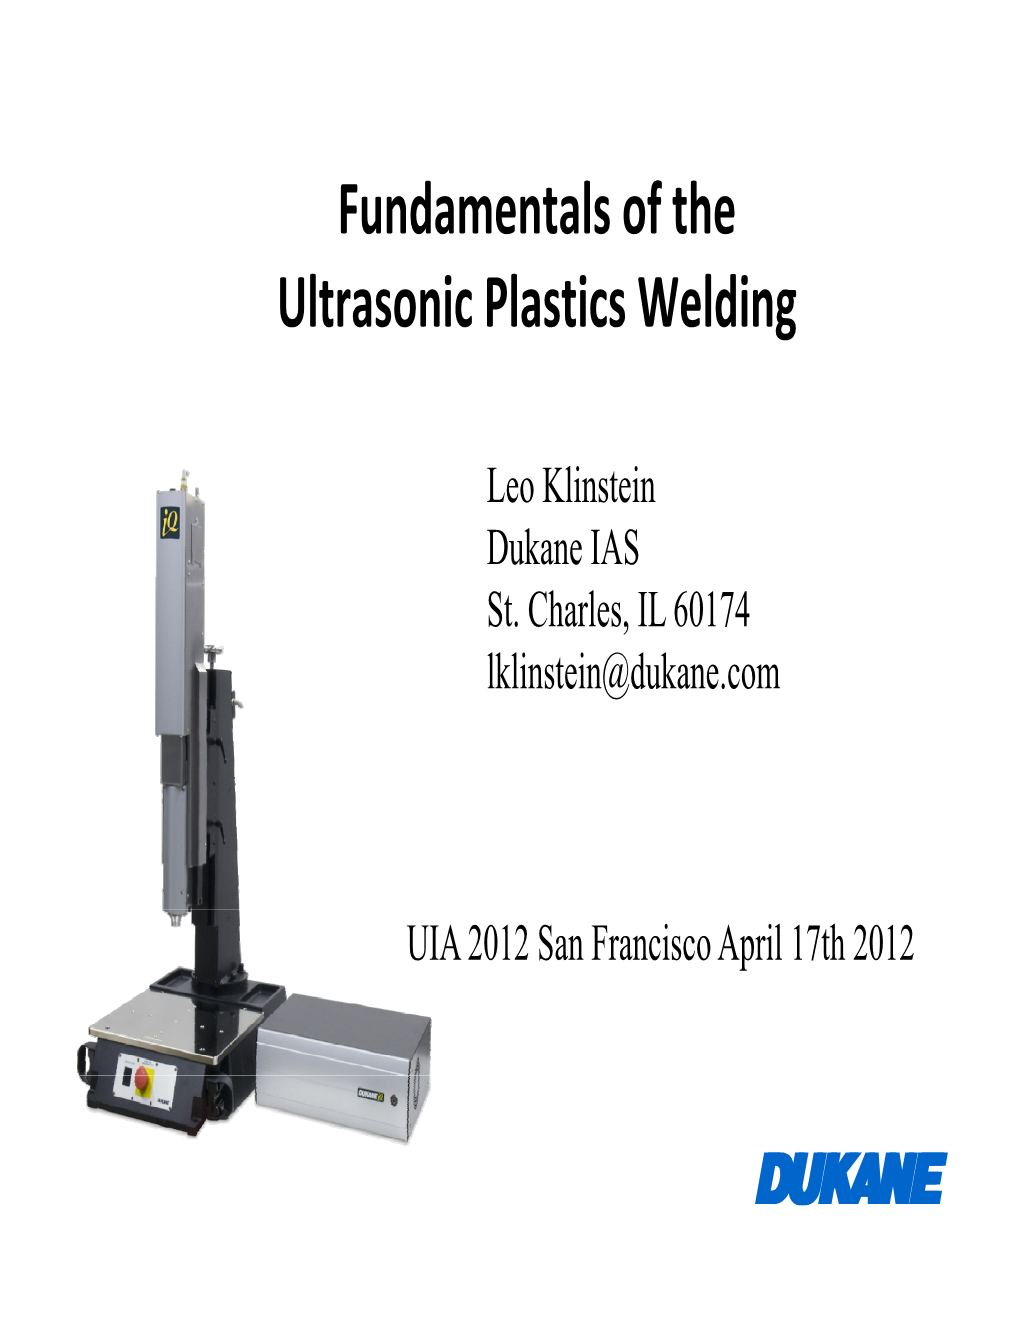 Fundamentals of the Ultrasonic Plastics Welding